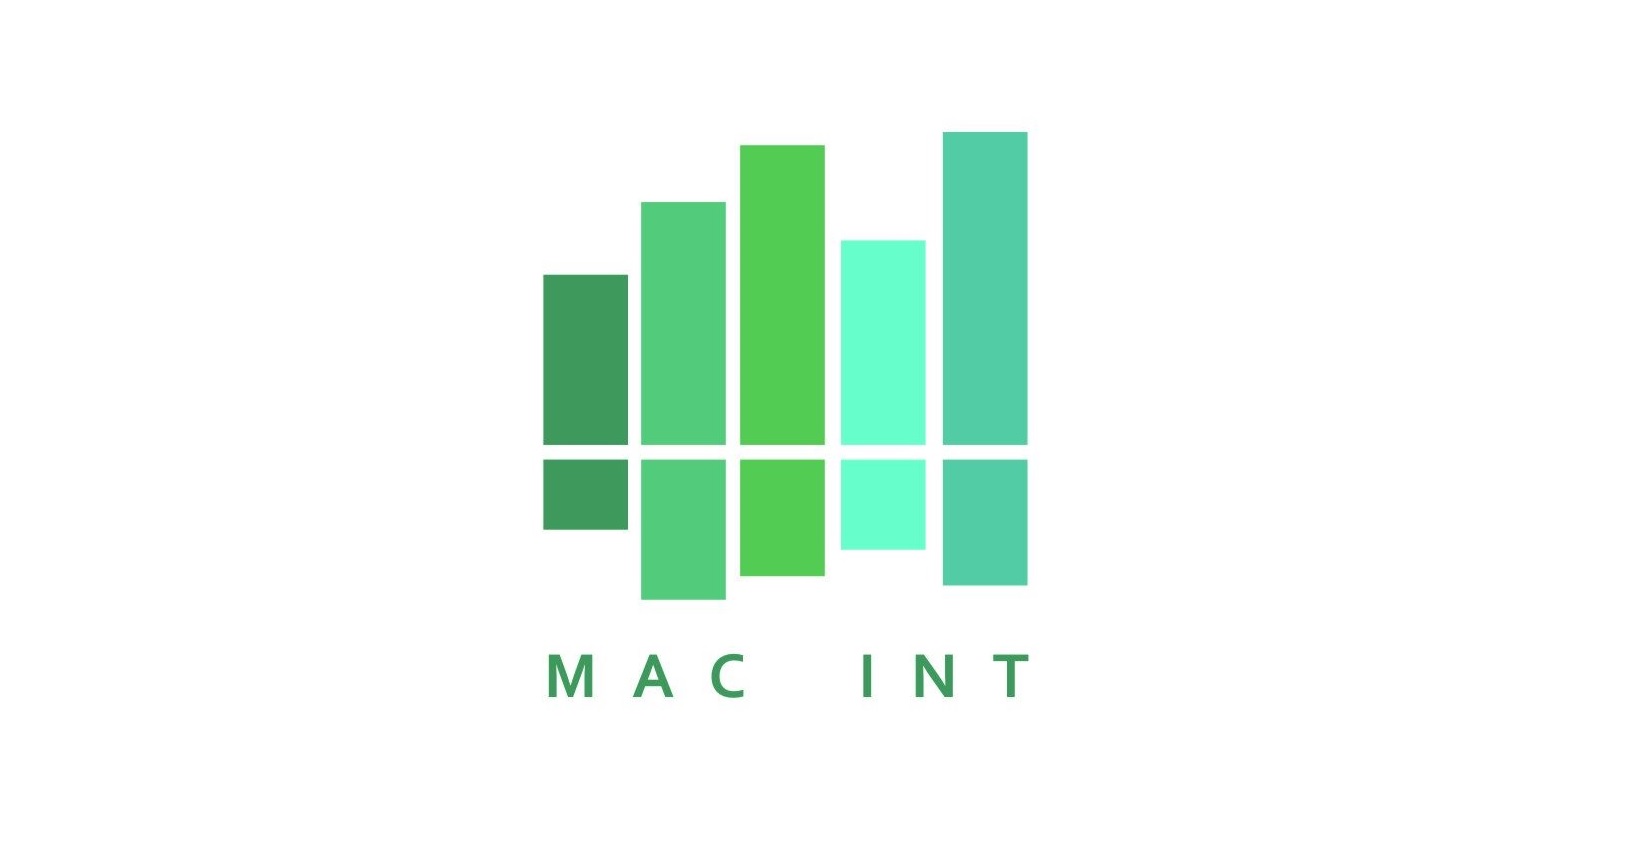 MAC INT logo